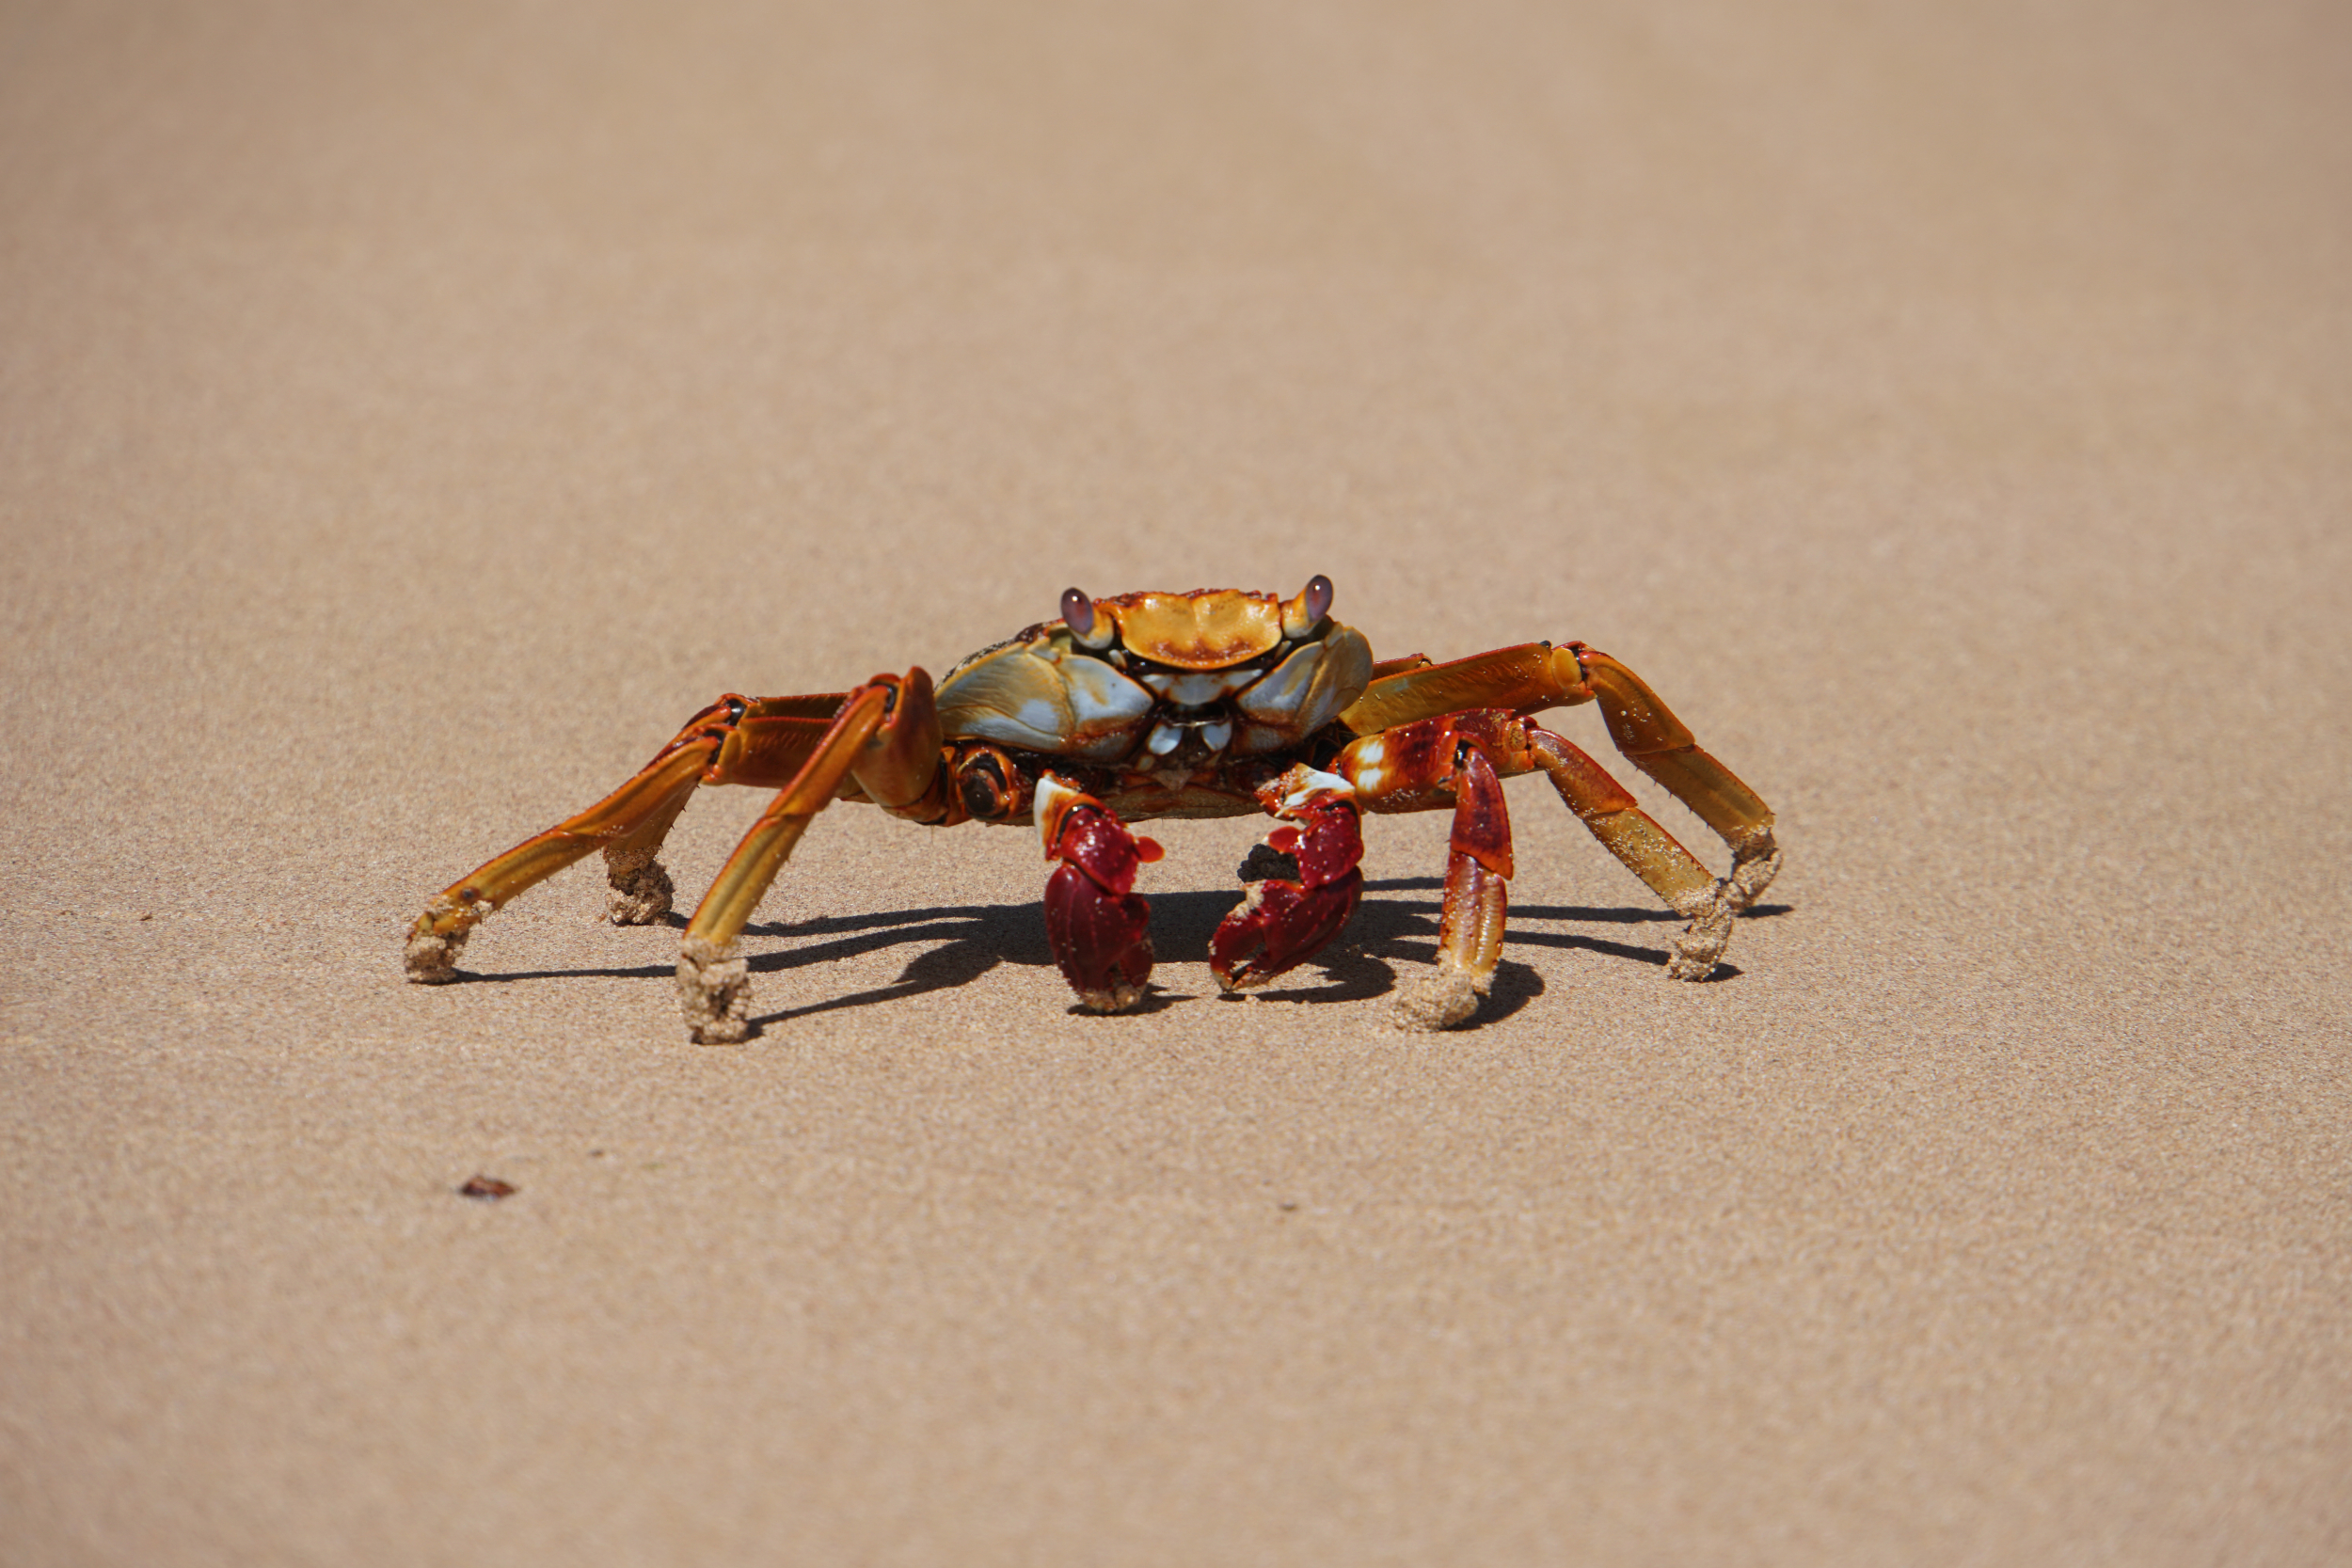 32. Local Sally Lightfoot Crab